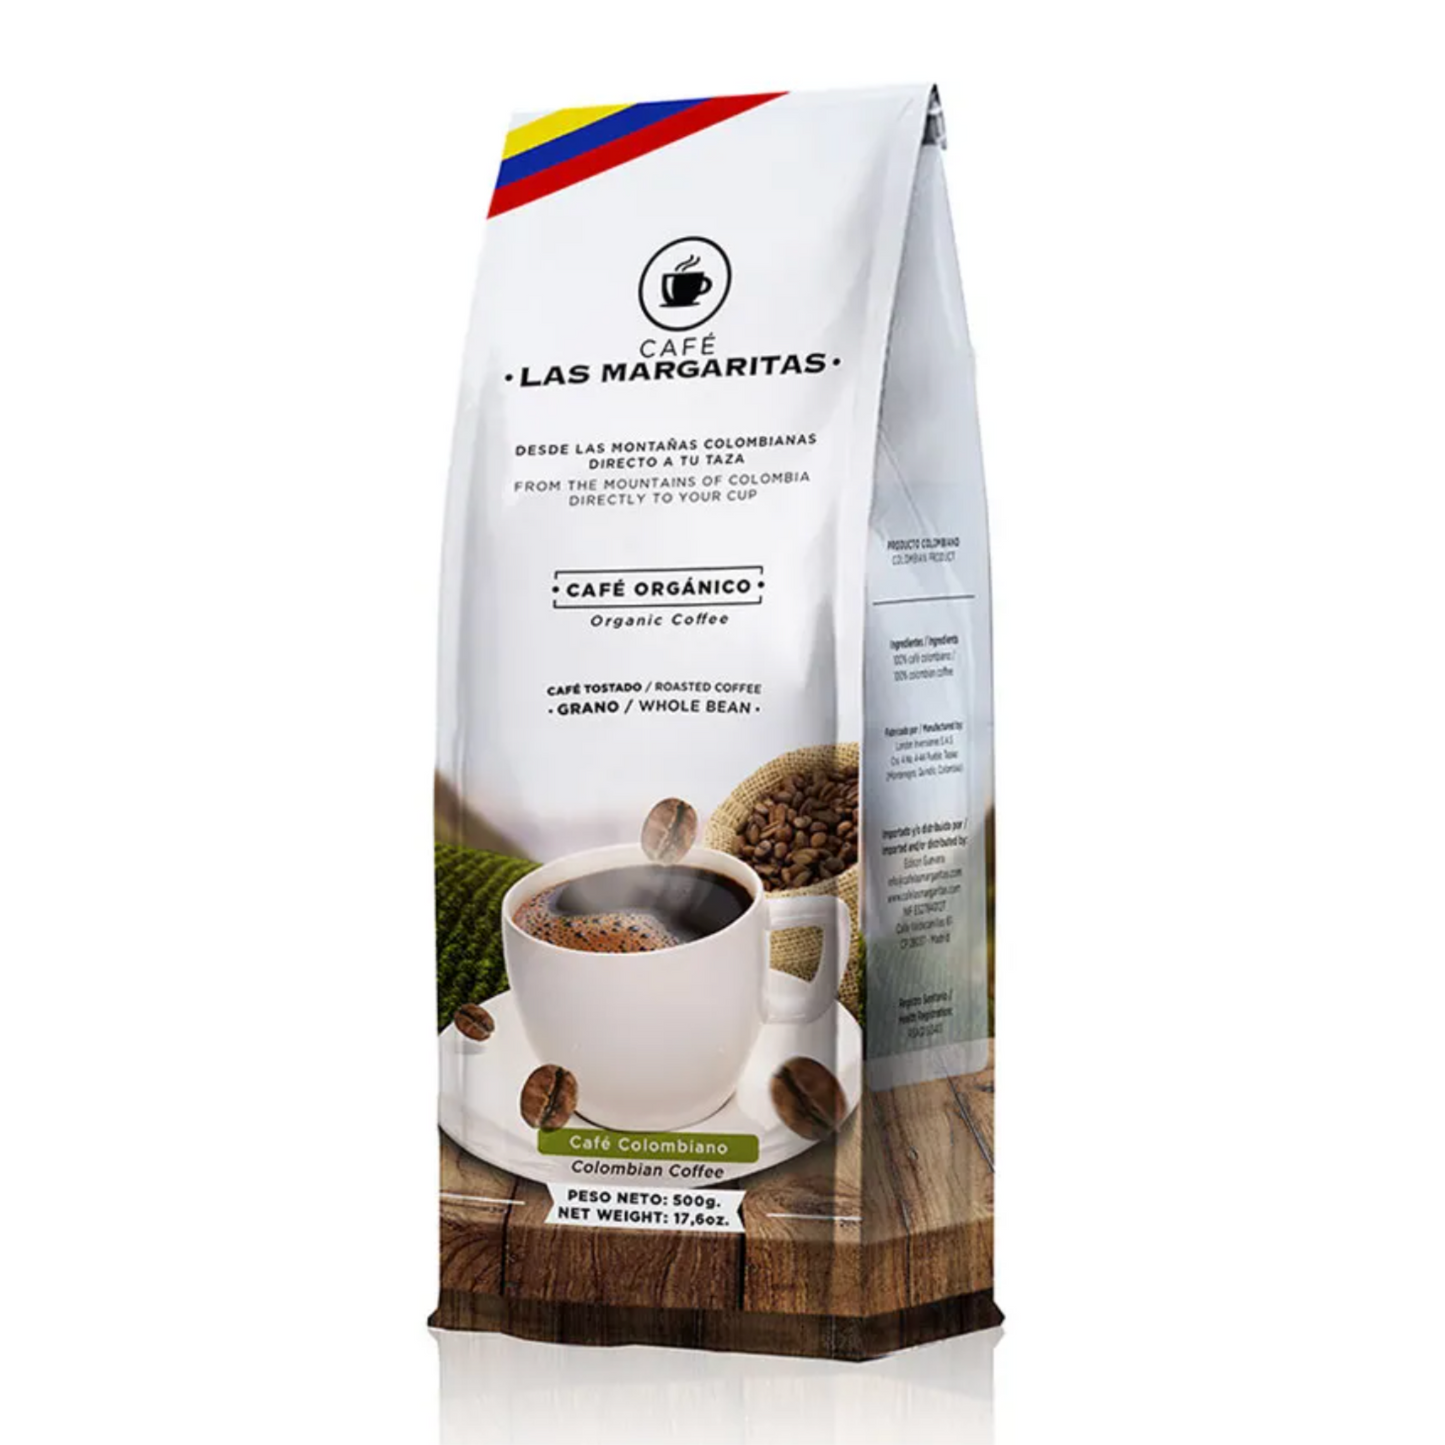 Las Margaritas Single-Origin Certified Specialty Coffee. FInd it here at Coffee Bean and Birds